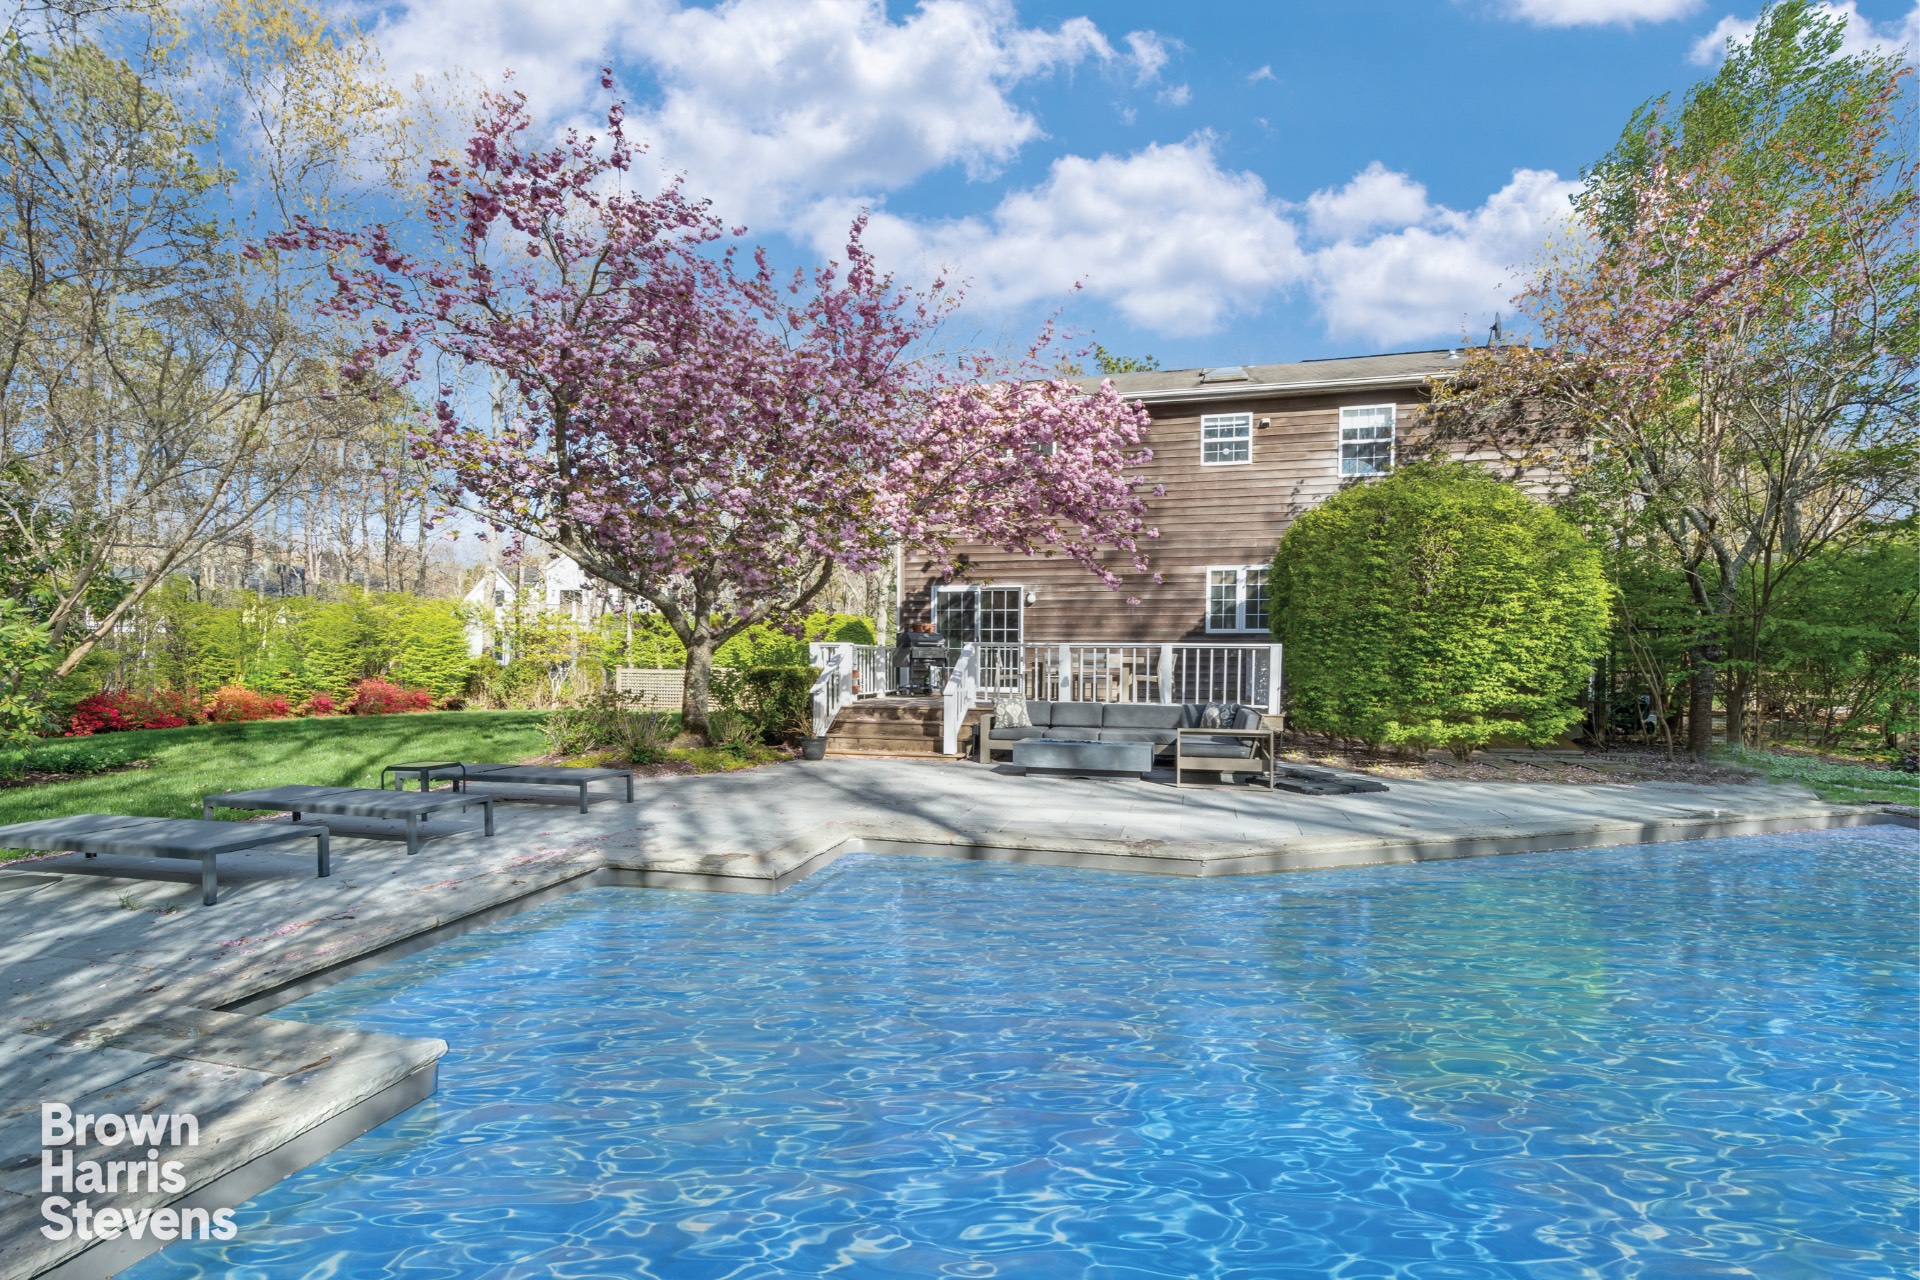 Rental Property at East Hampton, East Hampton, Hamptons, NY - Bedrooms: 4 
Bathrooms: 3  - $44,000 MO.